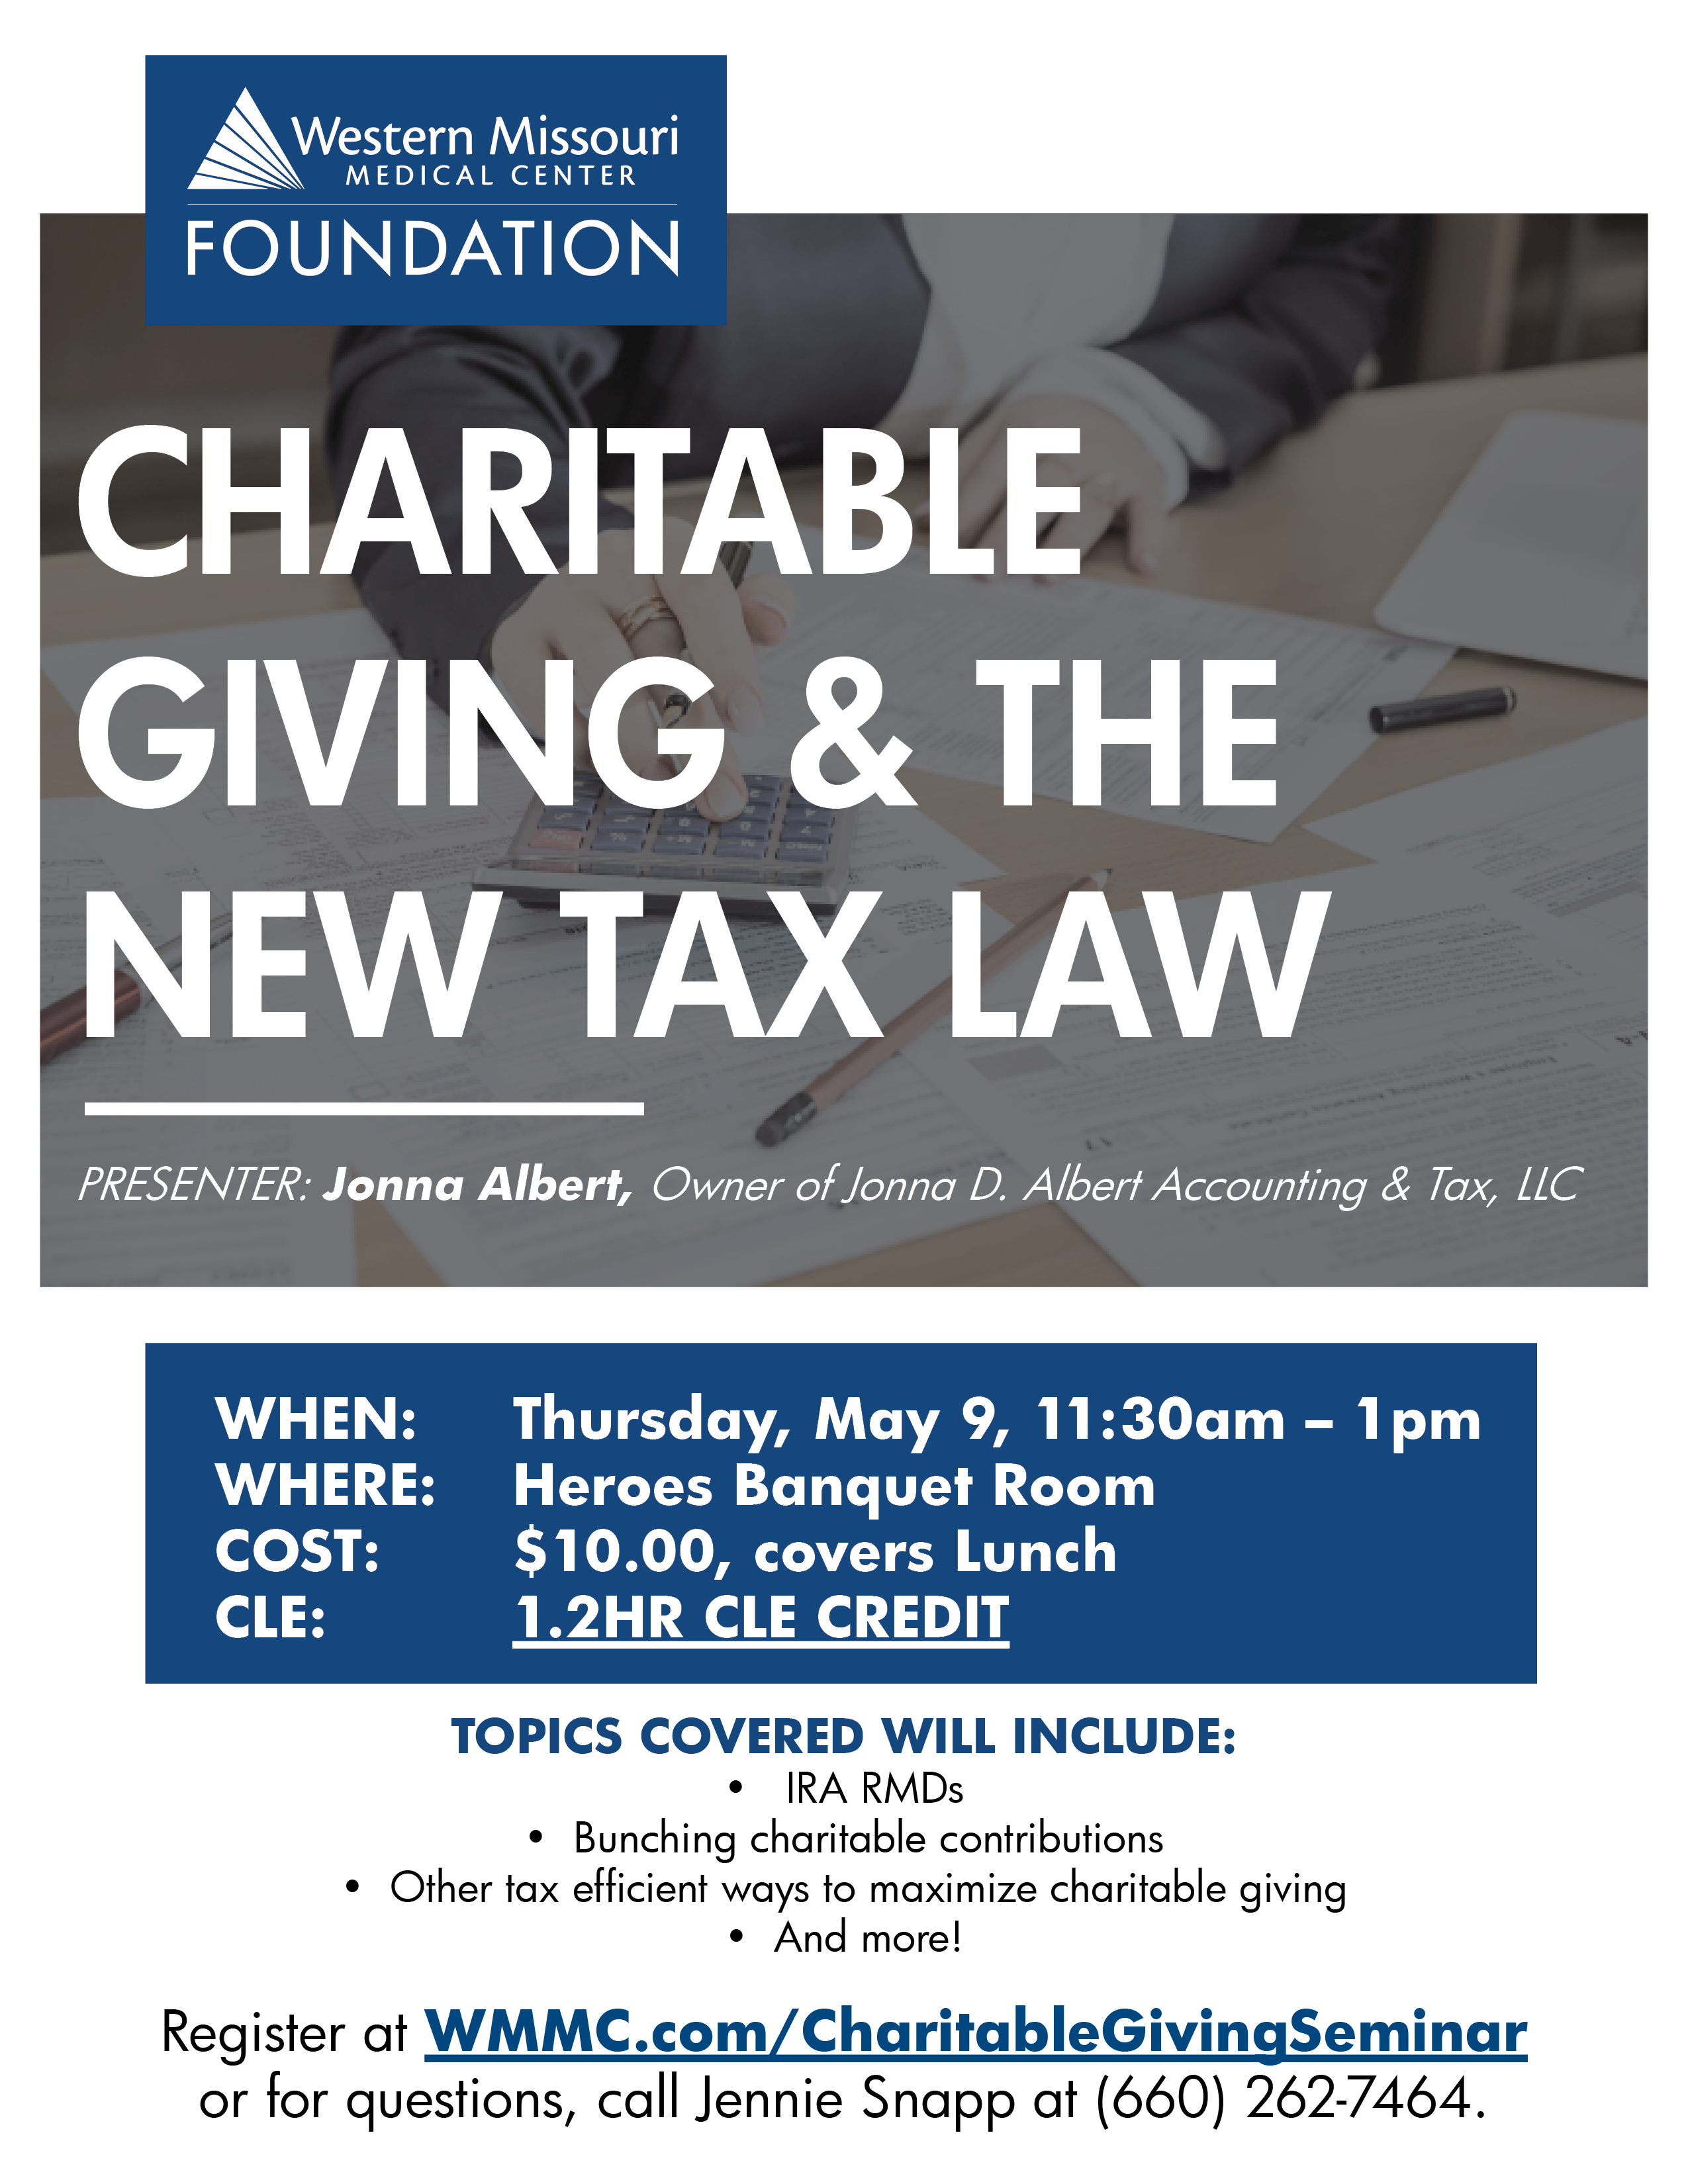 05.09.19 Chartiable Giving & New Tax Law Seminar